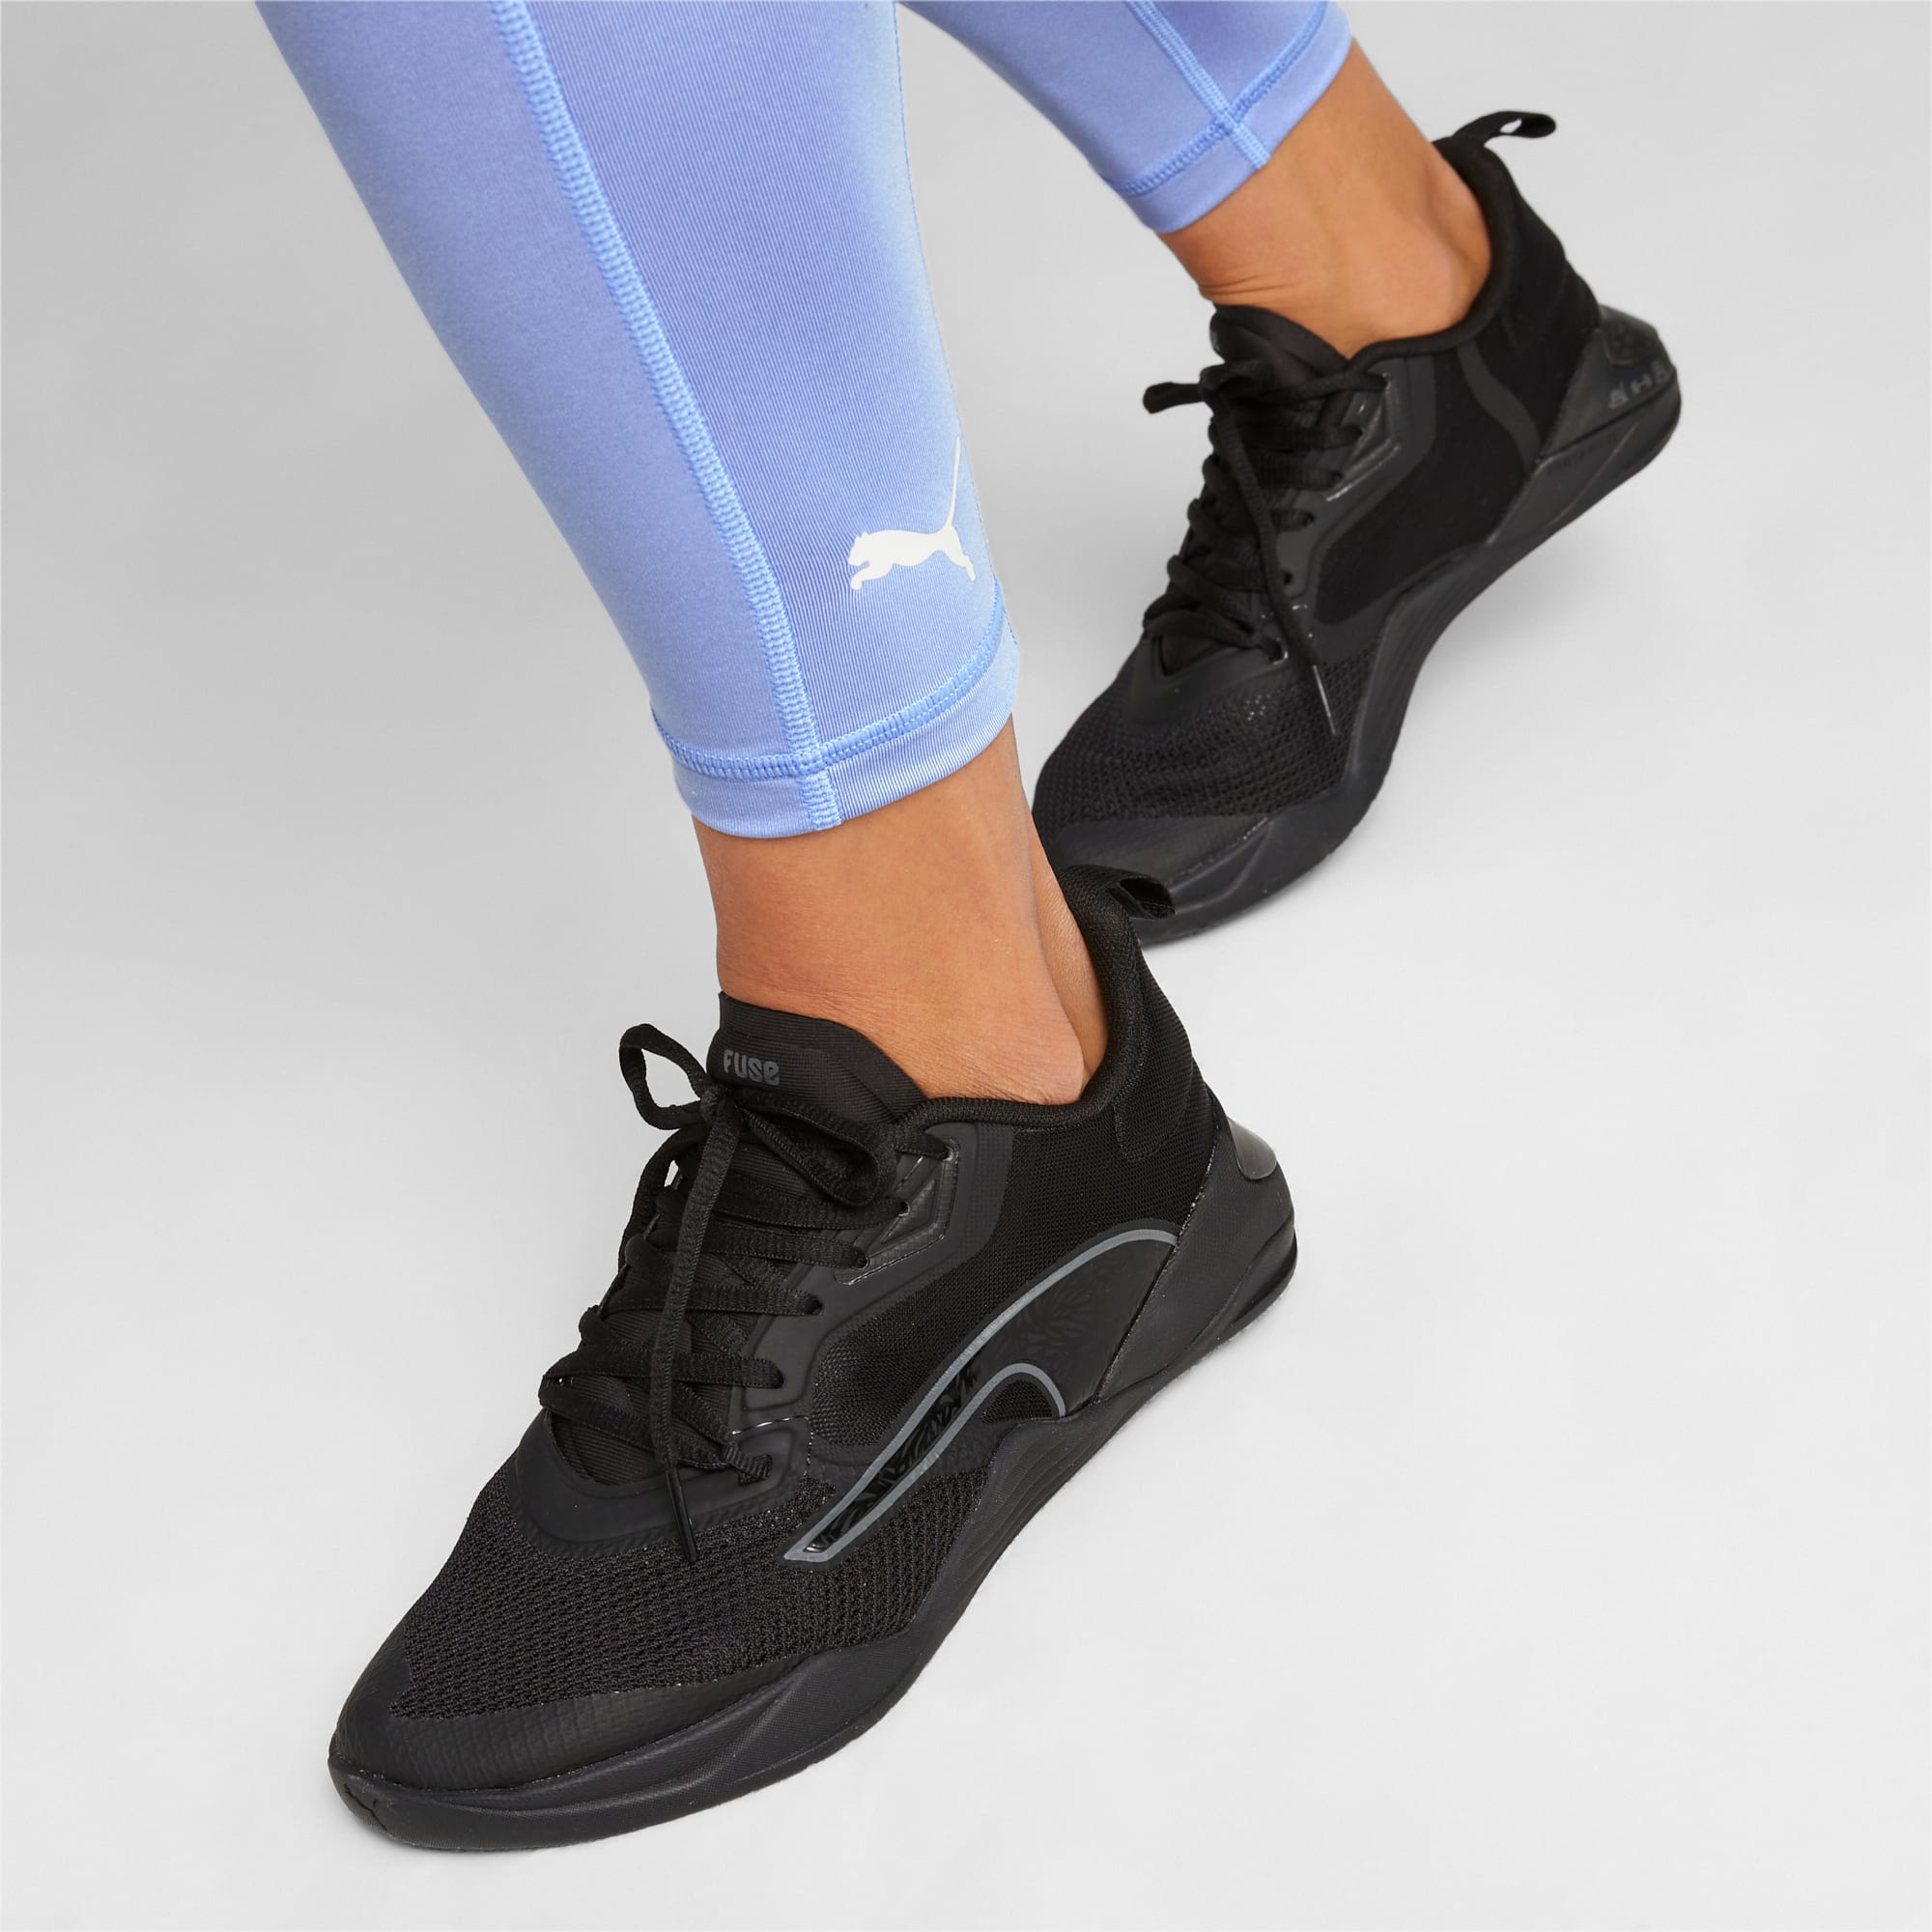 PUMA Fuse 2.0 Nova Shine Women's Training Shoes, Black/Cool Dark Grey, Size 35,5, Shoes